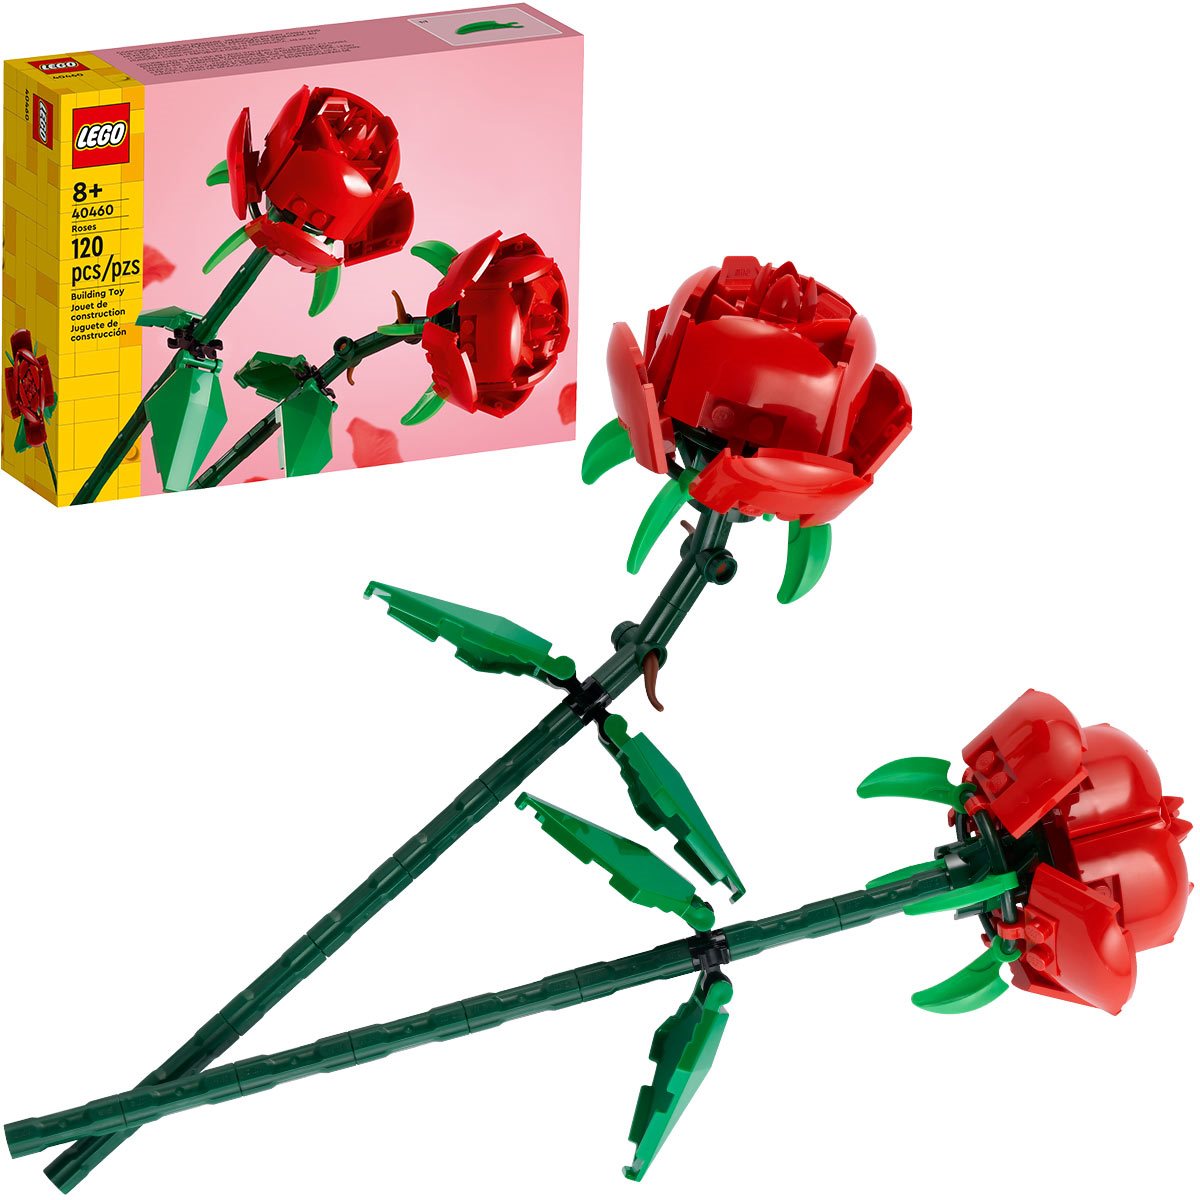 LEGO 40460 Roses - Entertainment Earth